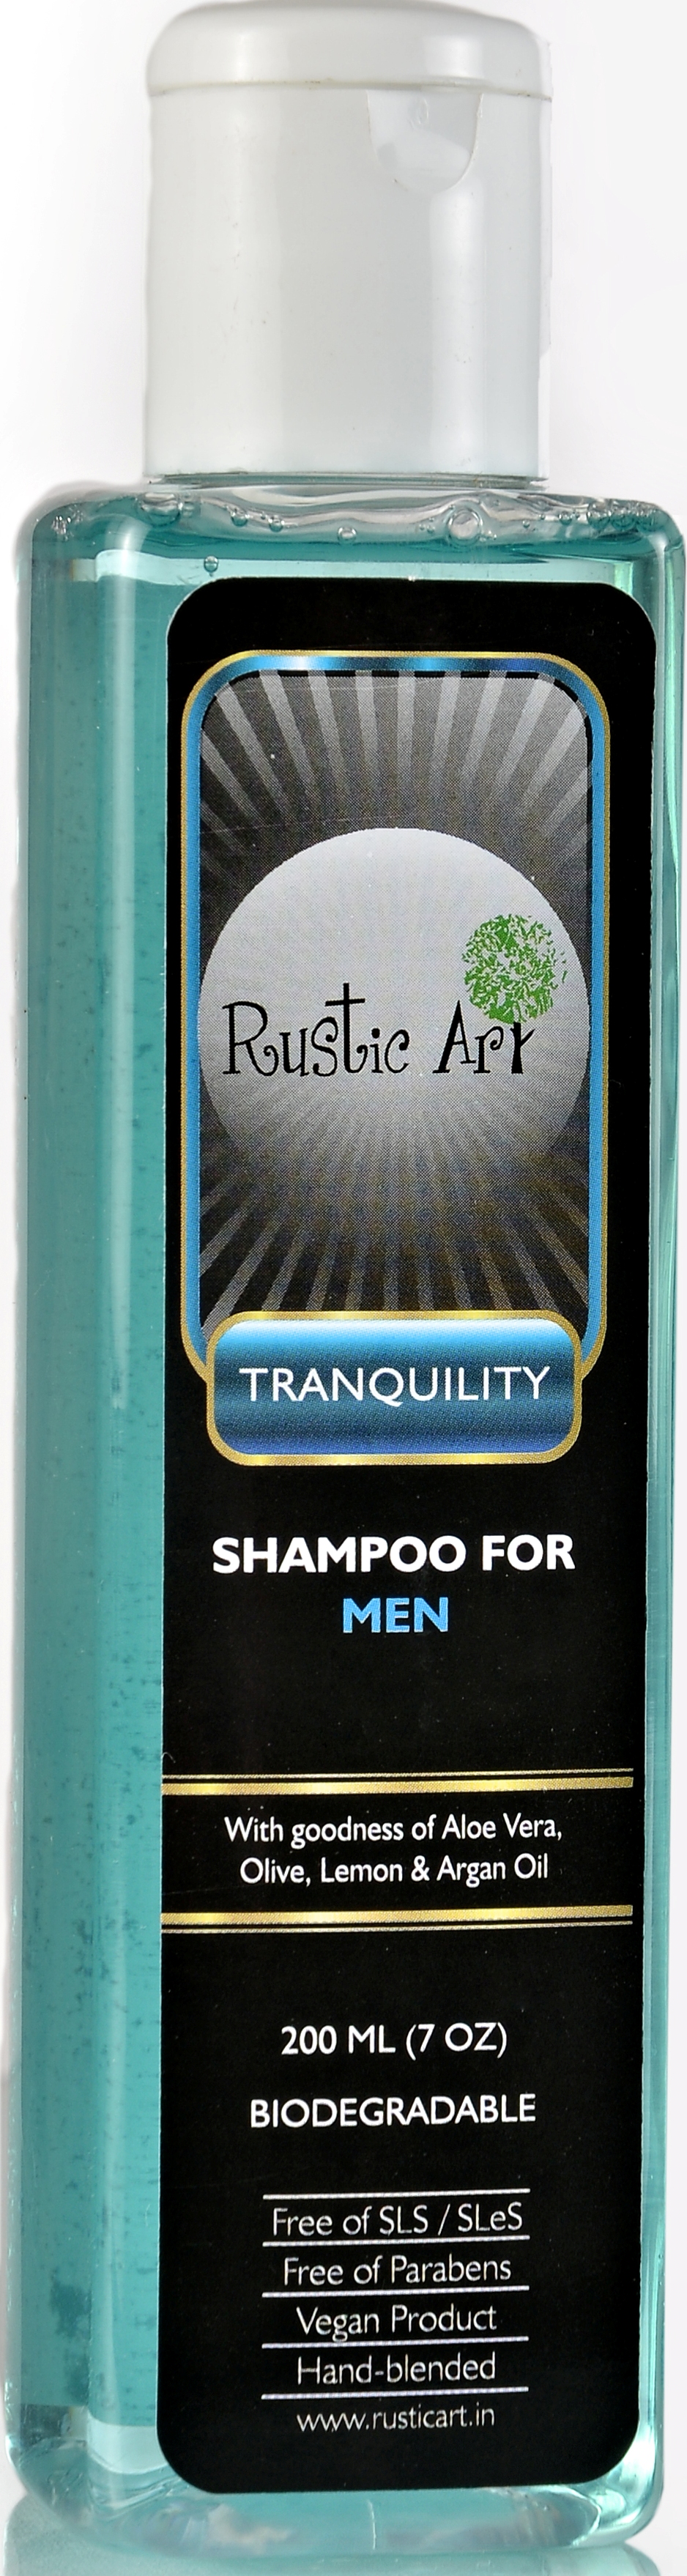 Buy Rustic Art Biodegradable Men's Shampoo at Best Price Online